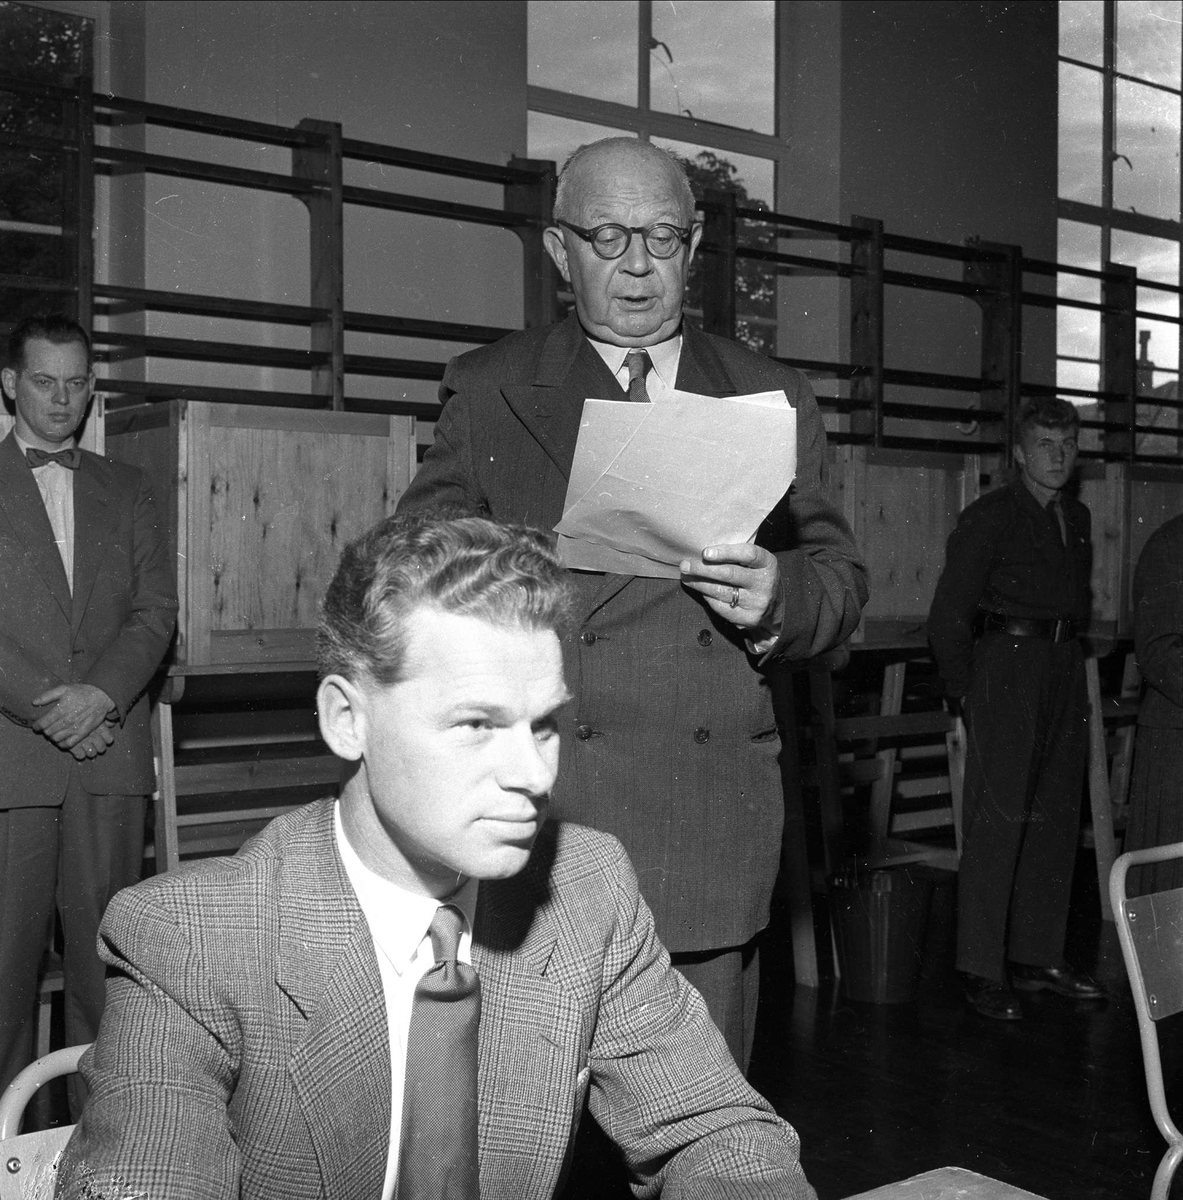 Stortingsvalg, Oslo, 07.10.1957, kontrollører i valglokalet..